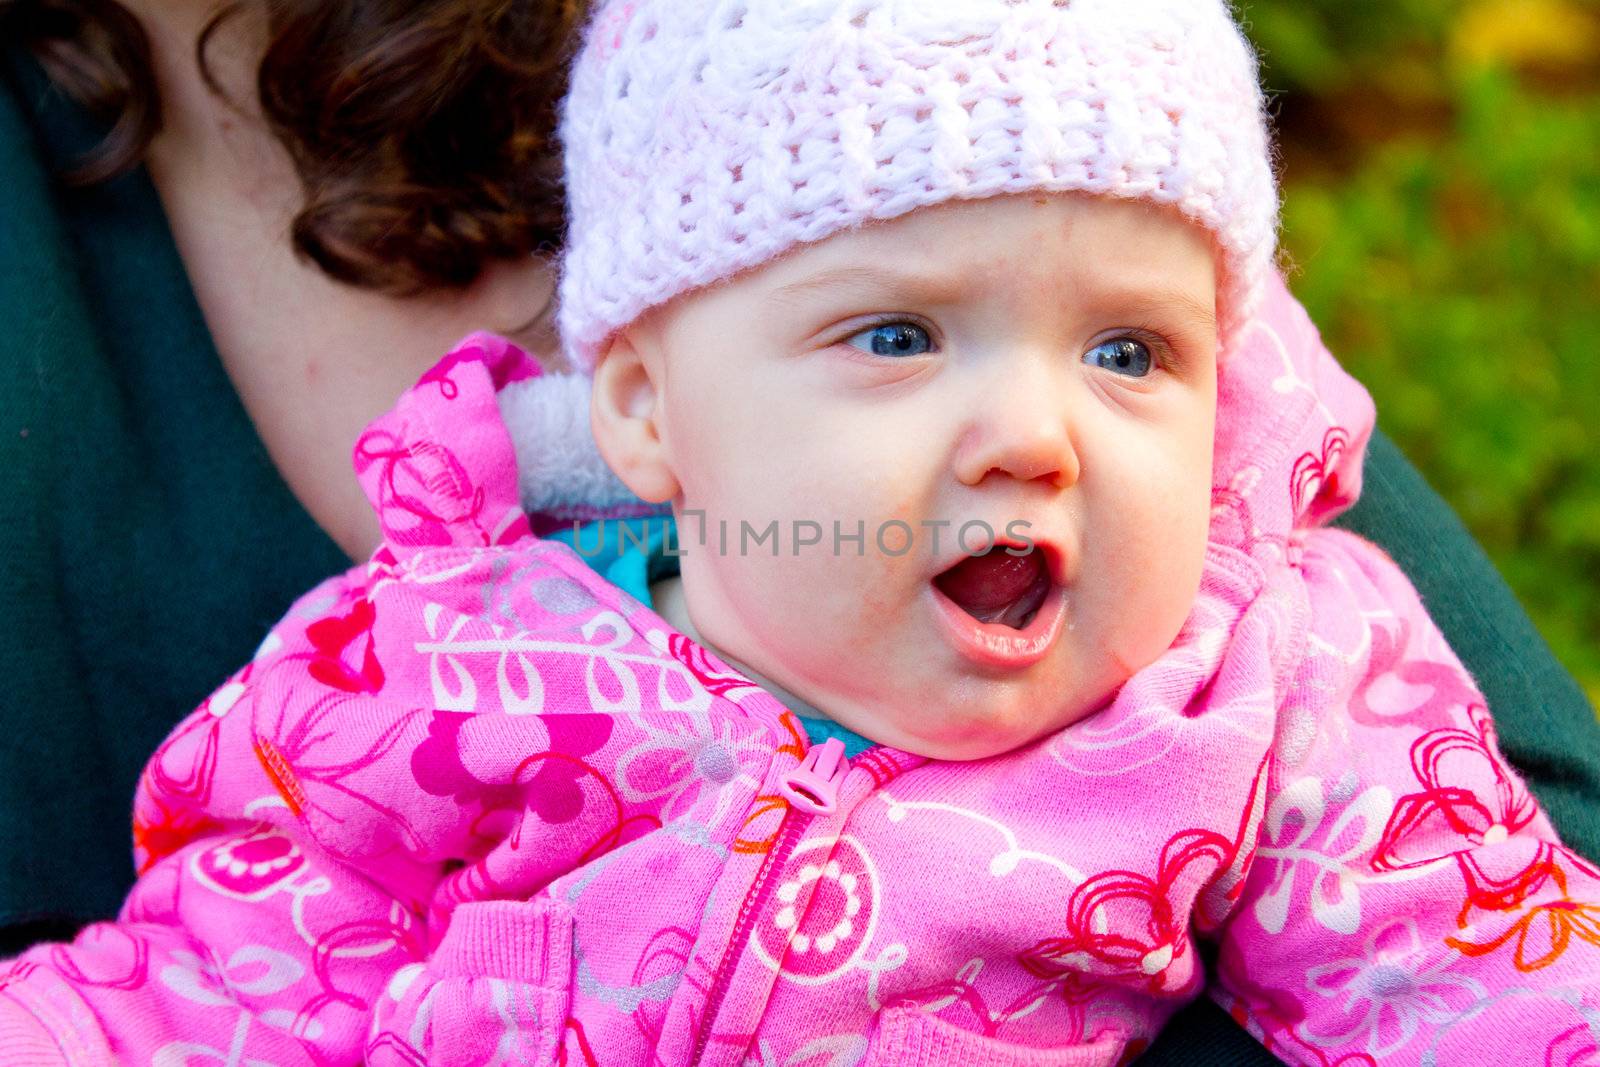 Infant Girl Yelling by joshuaraineyphotography